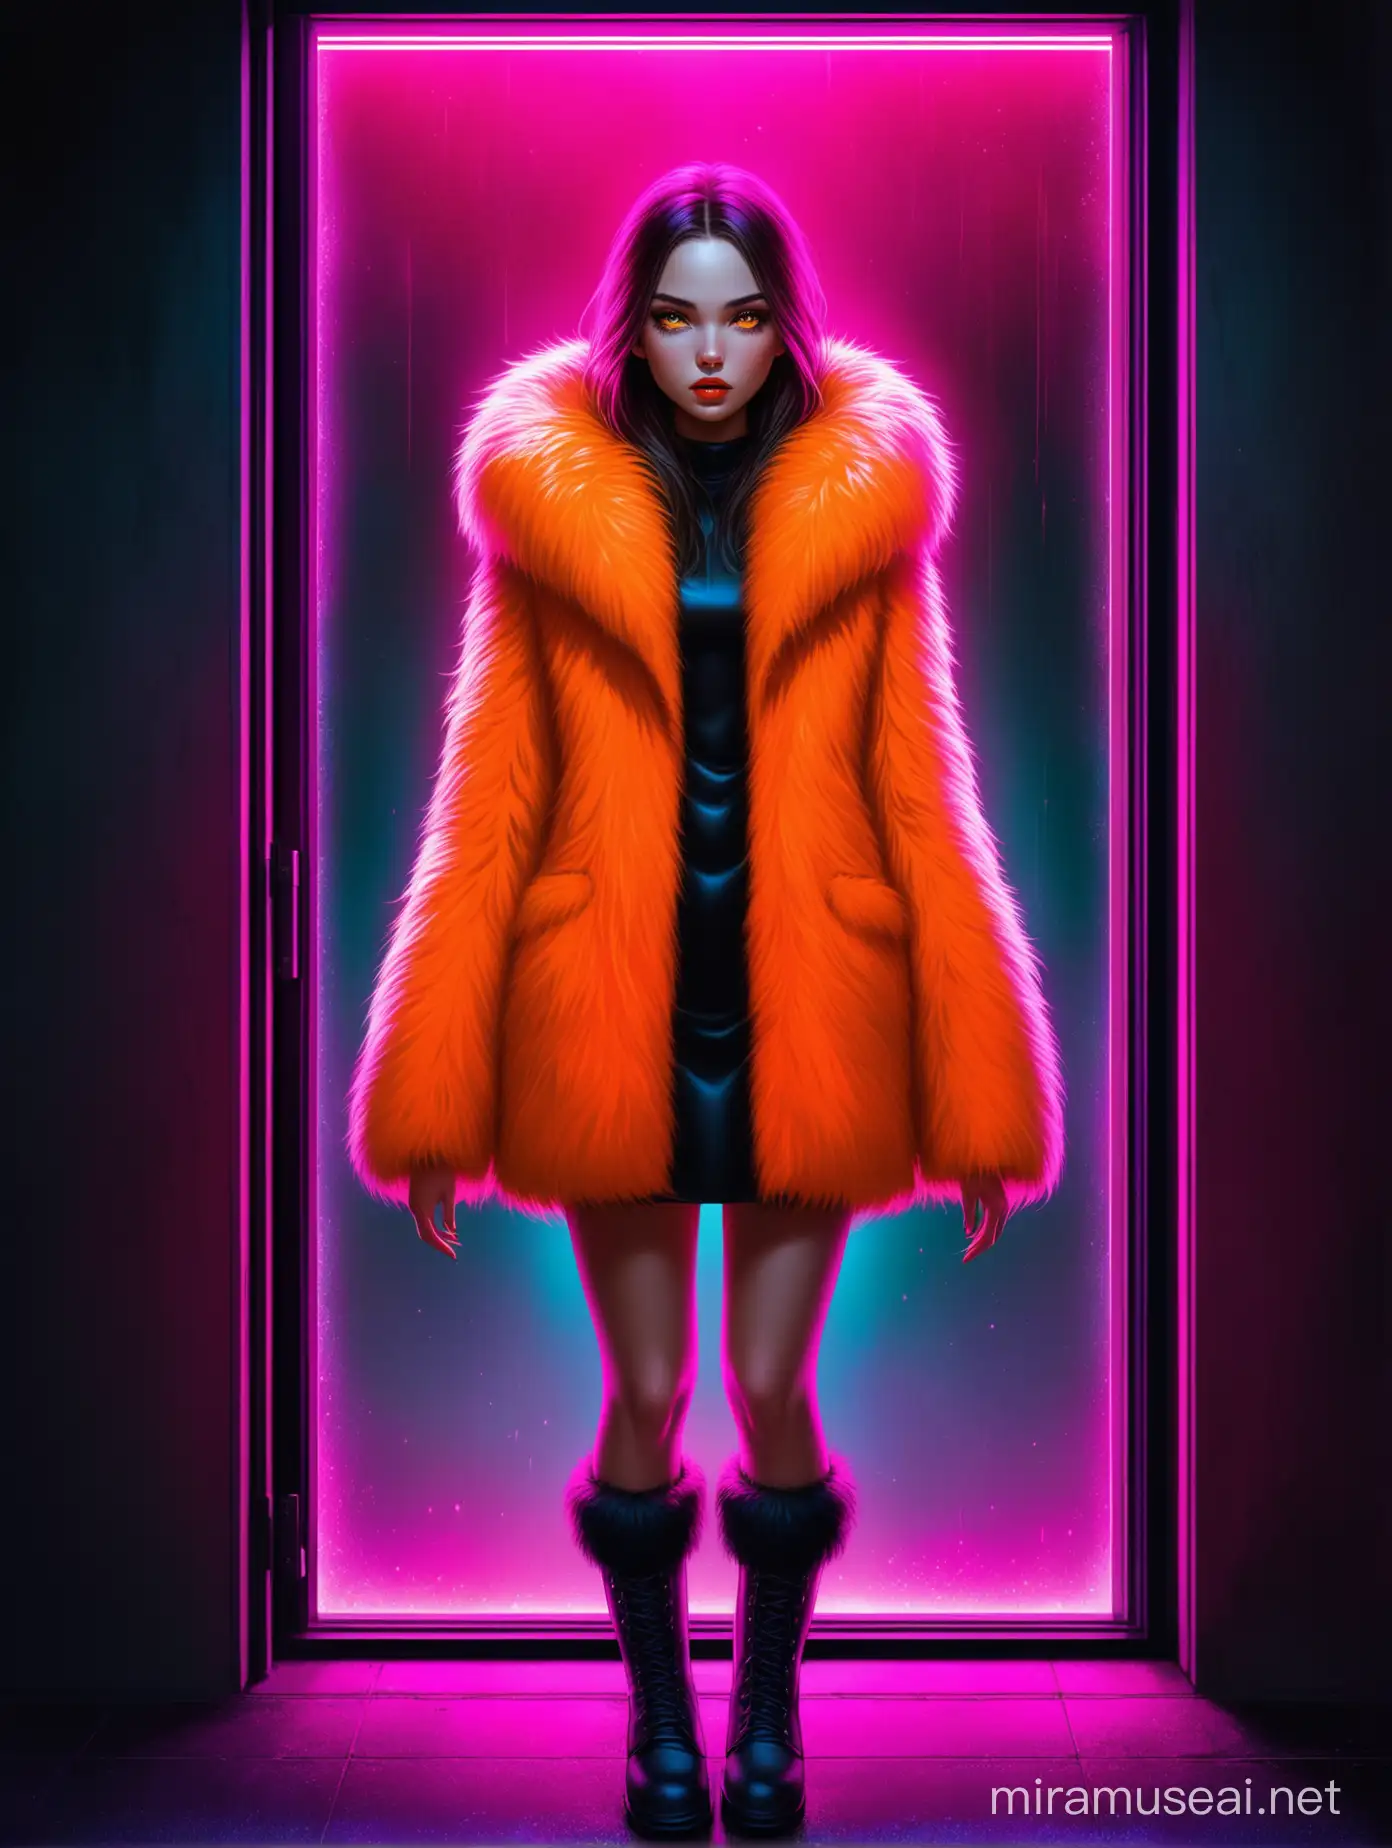 Glamorous Young Woman in Neon Fur Coat Peering through Window